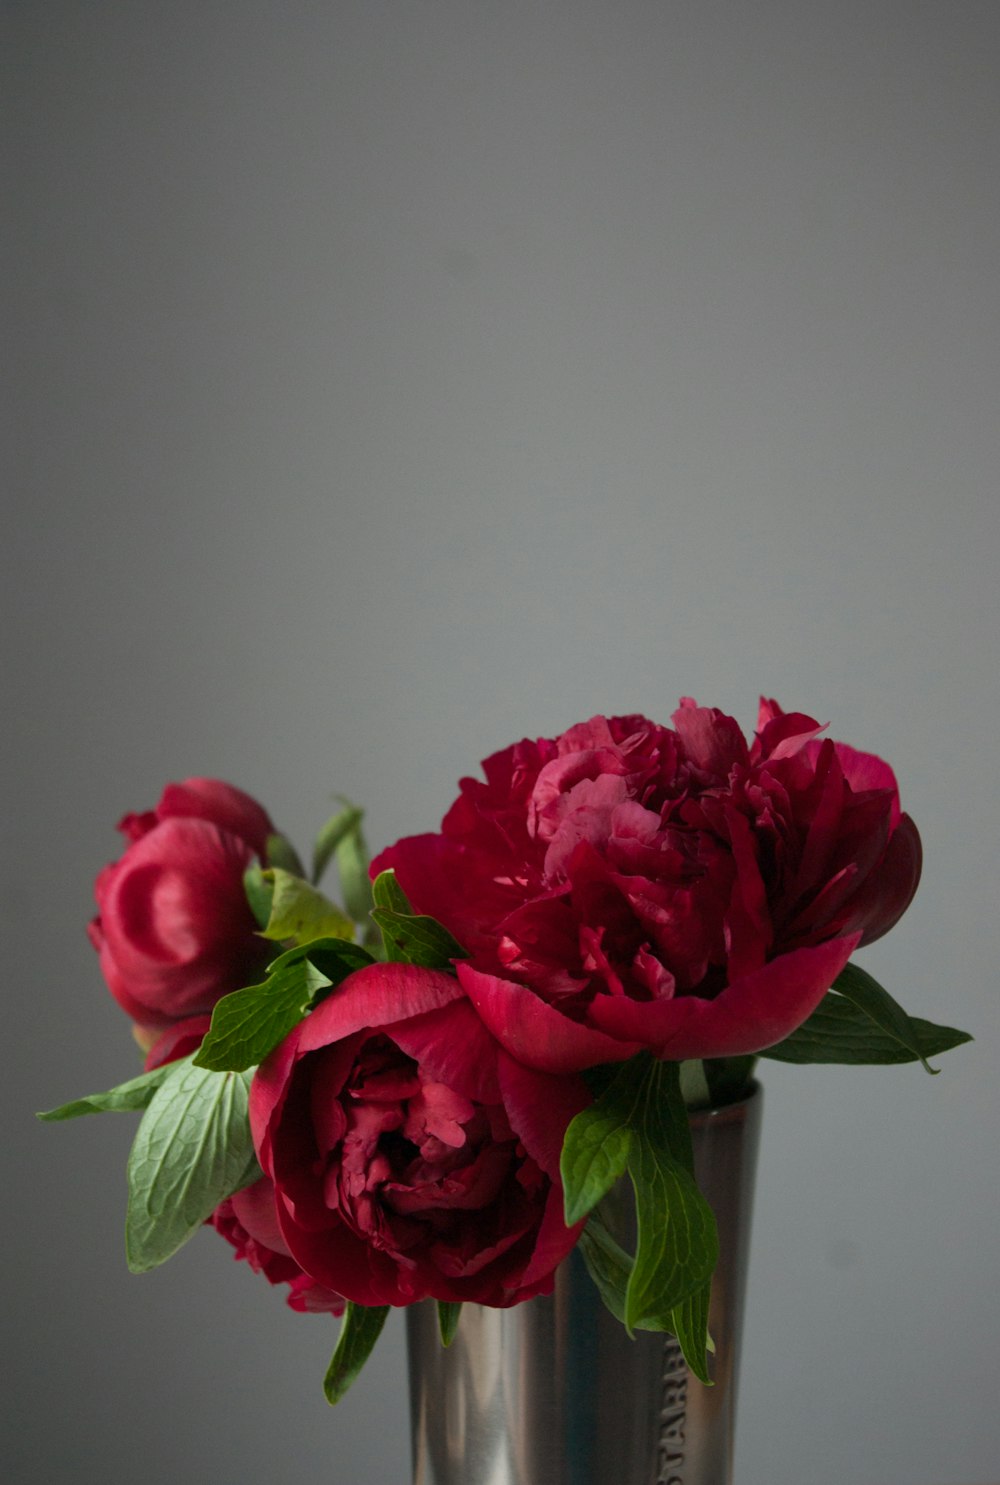 red roses in white vase